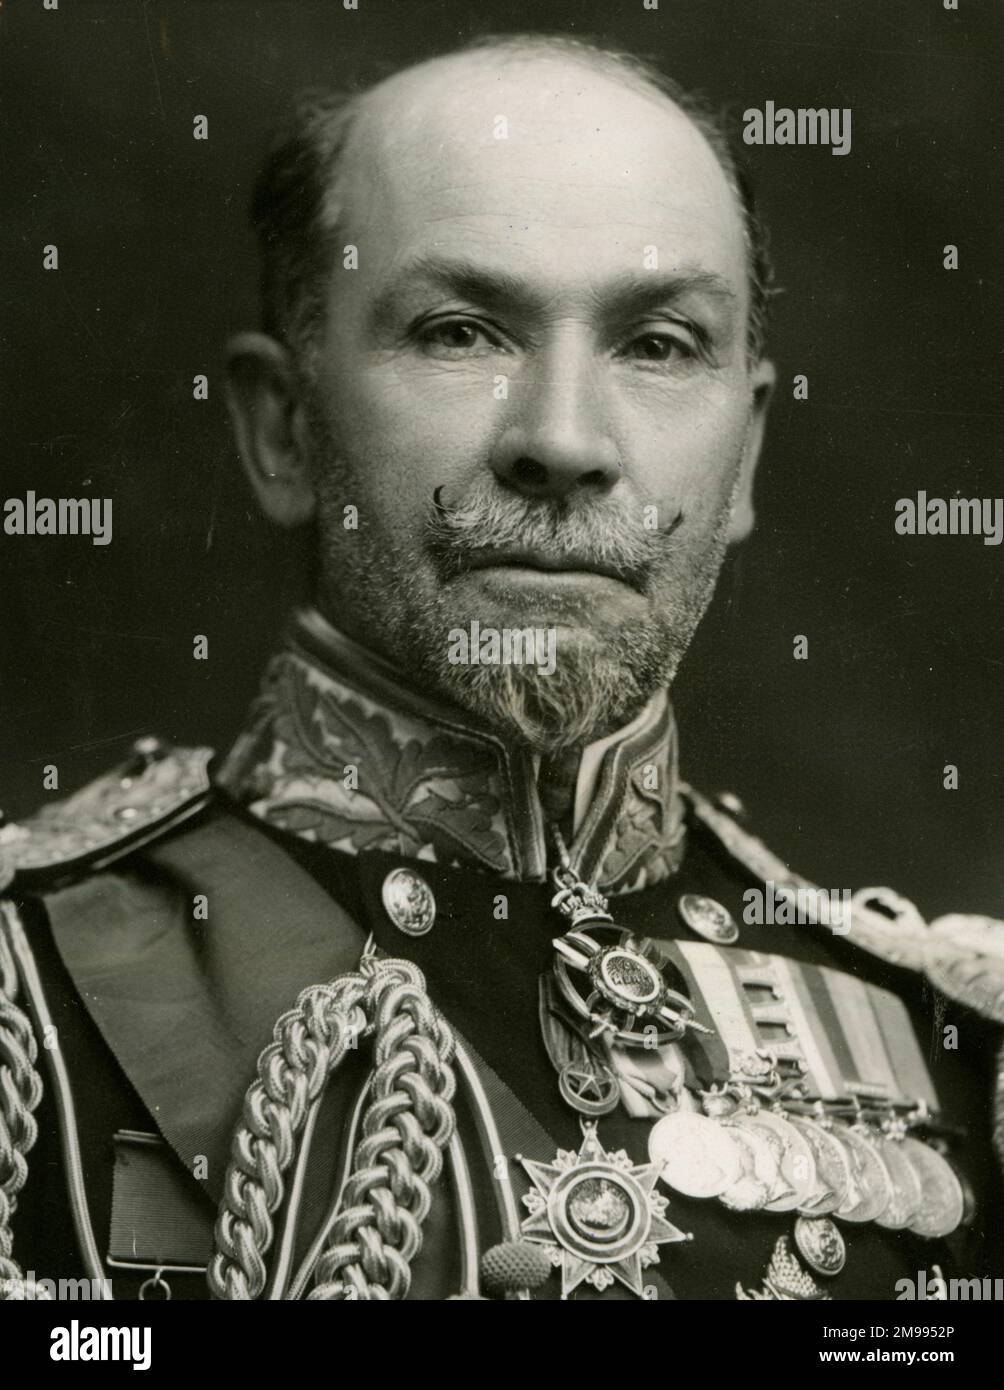 The Right Honourable Sir Edward Hobart Seymour, GCB, OM, GCVO, PC, Admiral of the Fleet, British Royal Navy. Stock Photo